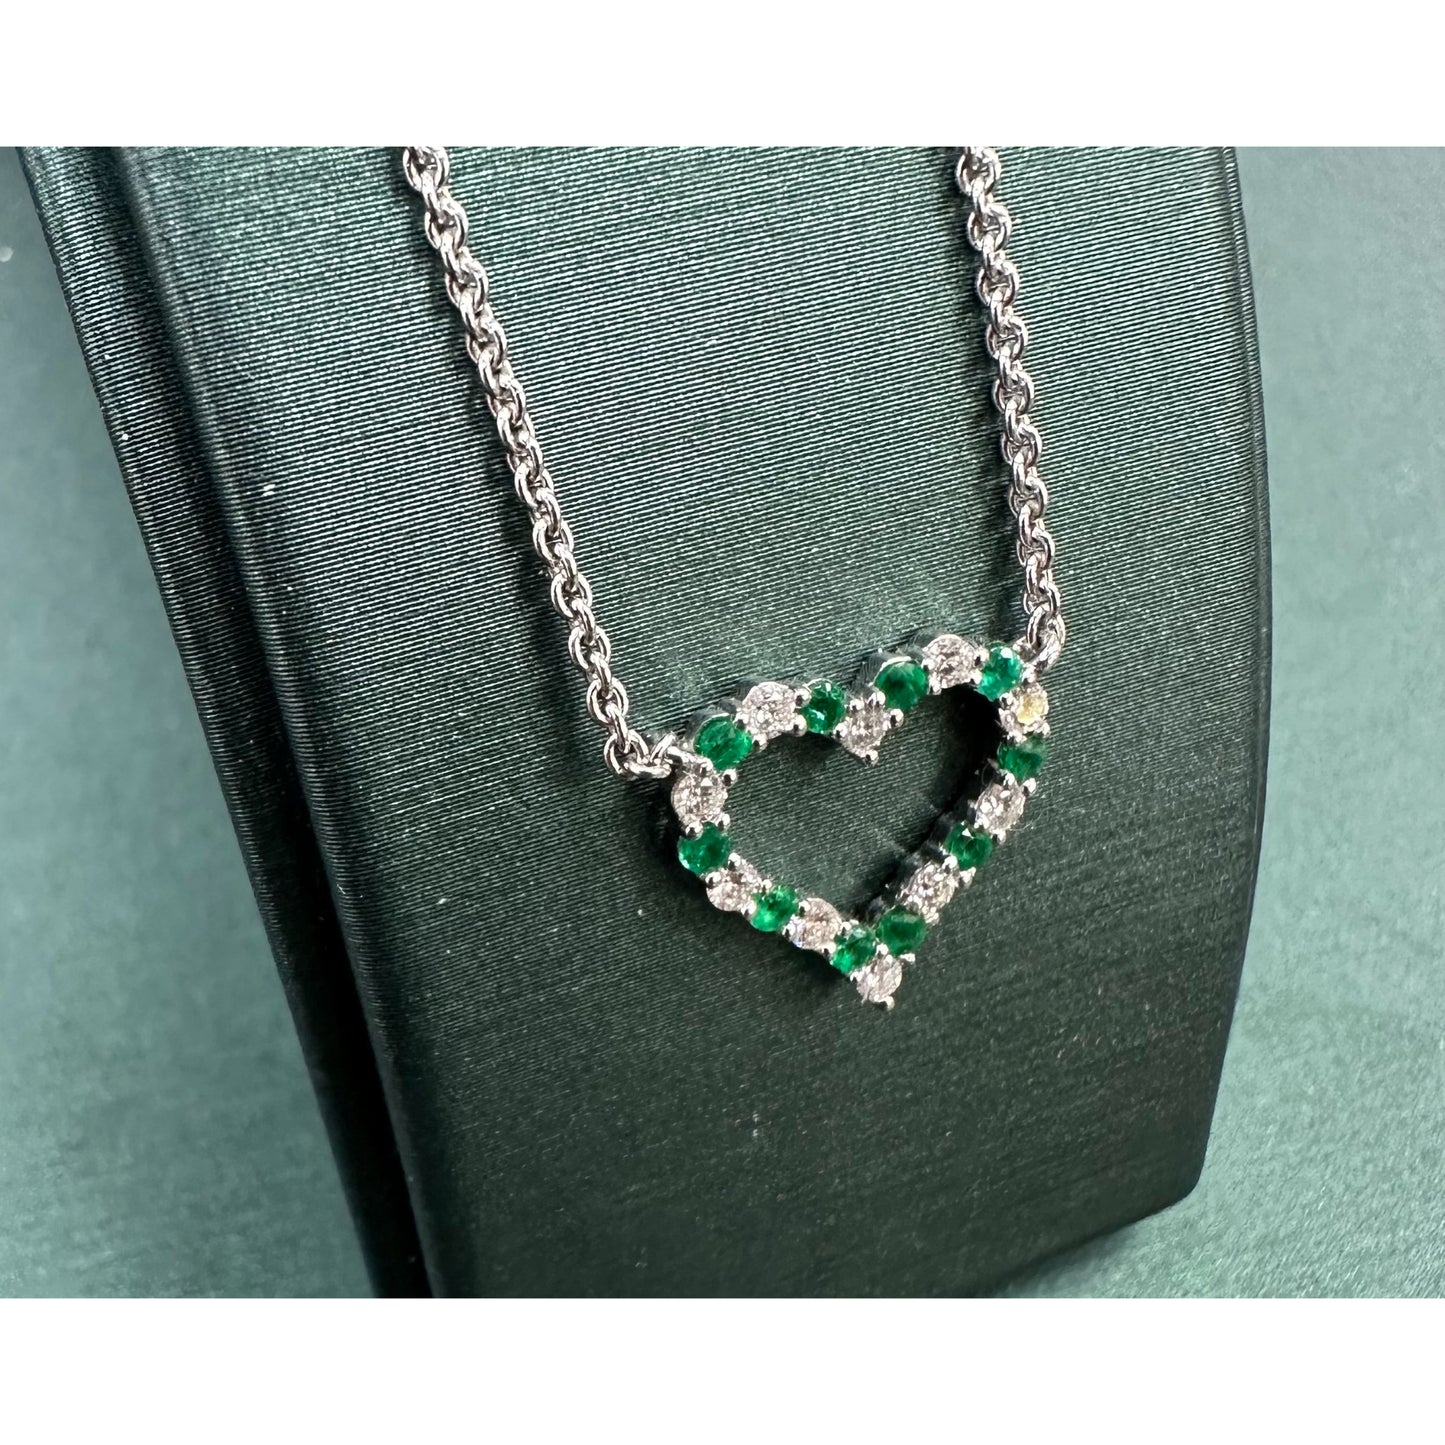 Polka dot emerald and diamond heart necklace